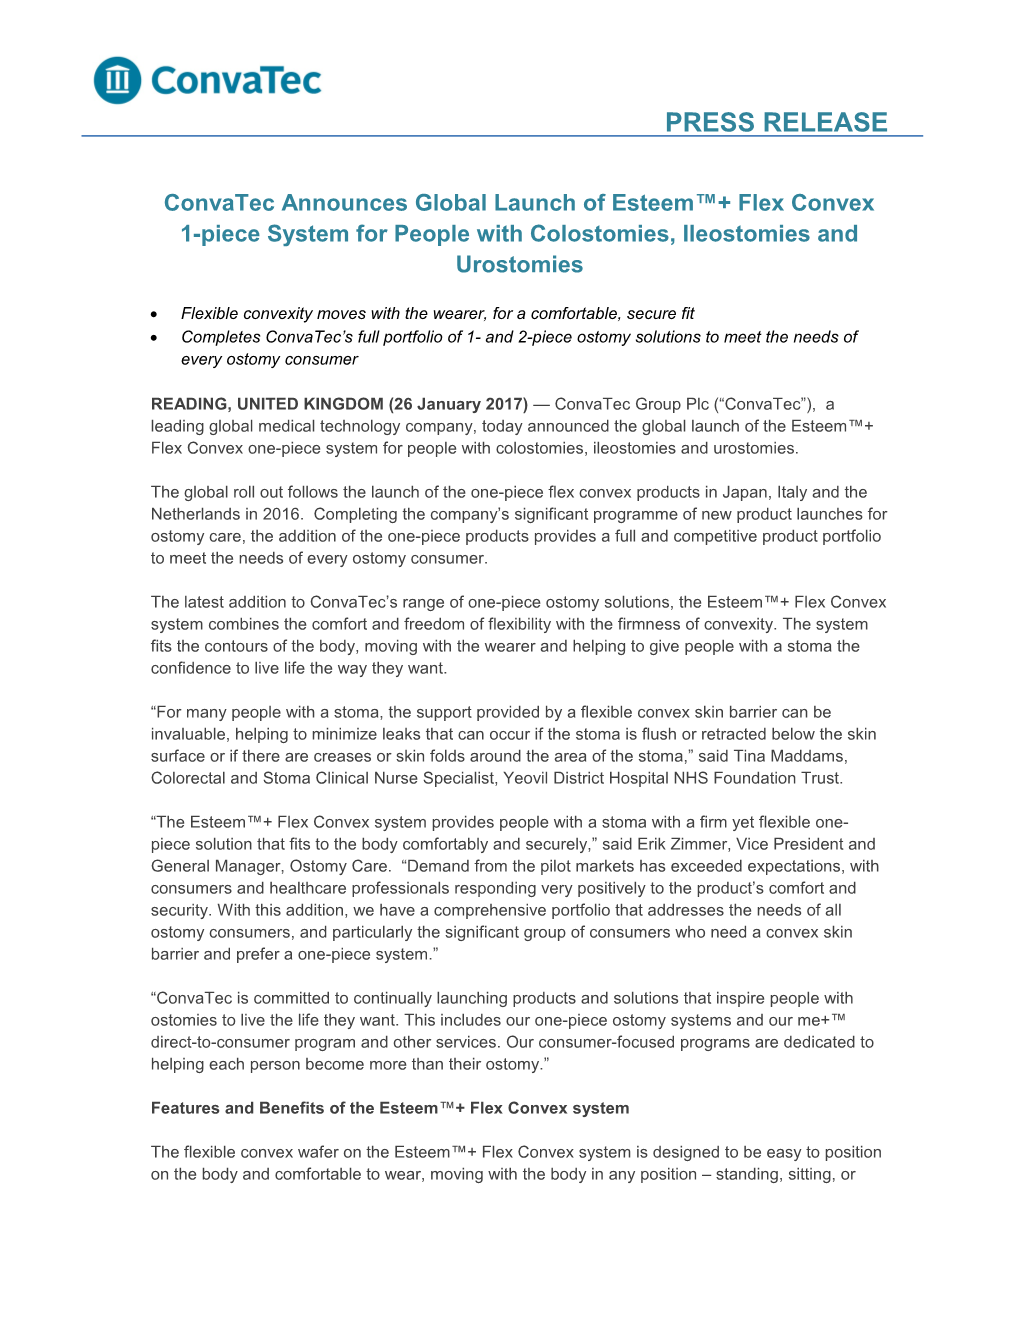 Convatec Announces Global Launch of Esteem + Flex Convex 1-Piece System for People With